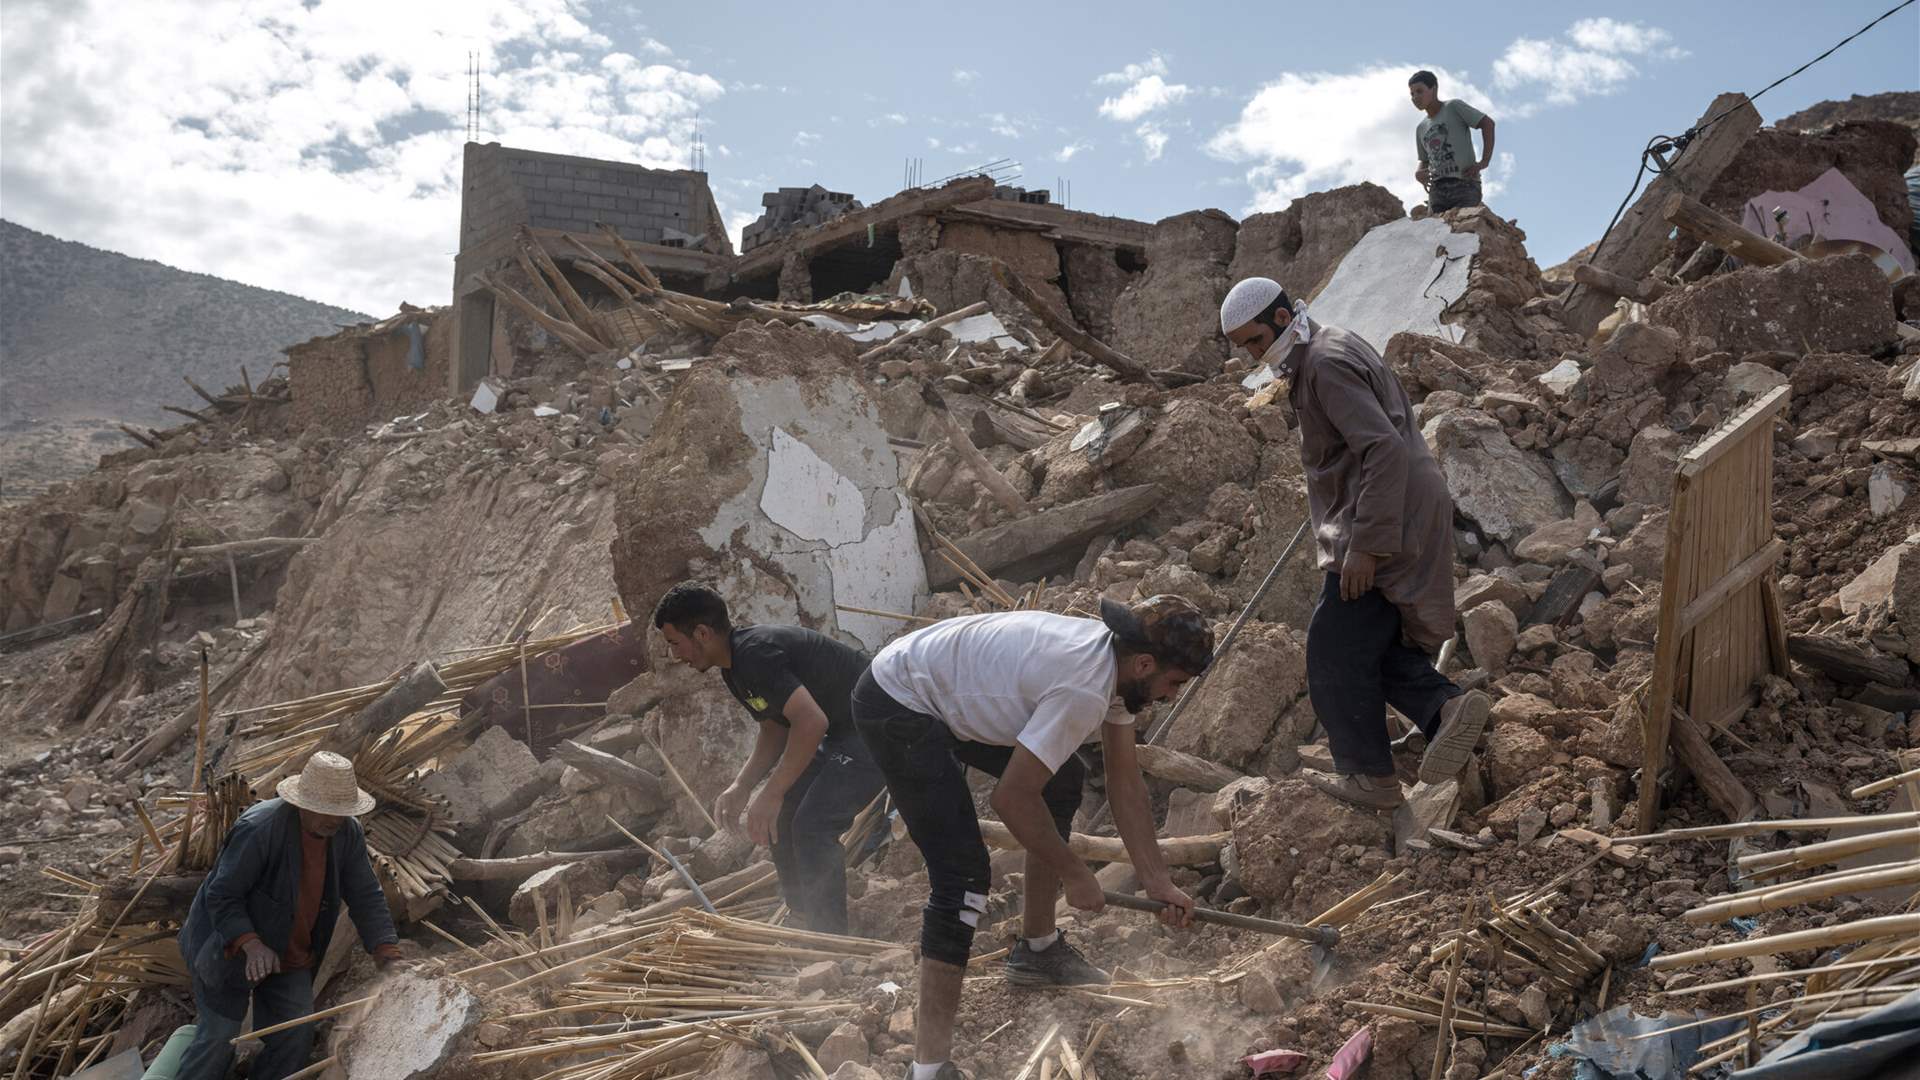 Morocco races to find survivors after devastating earthquake